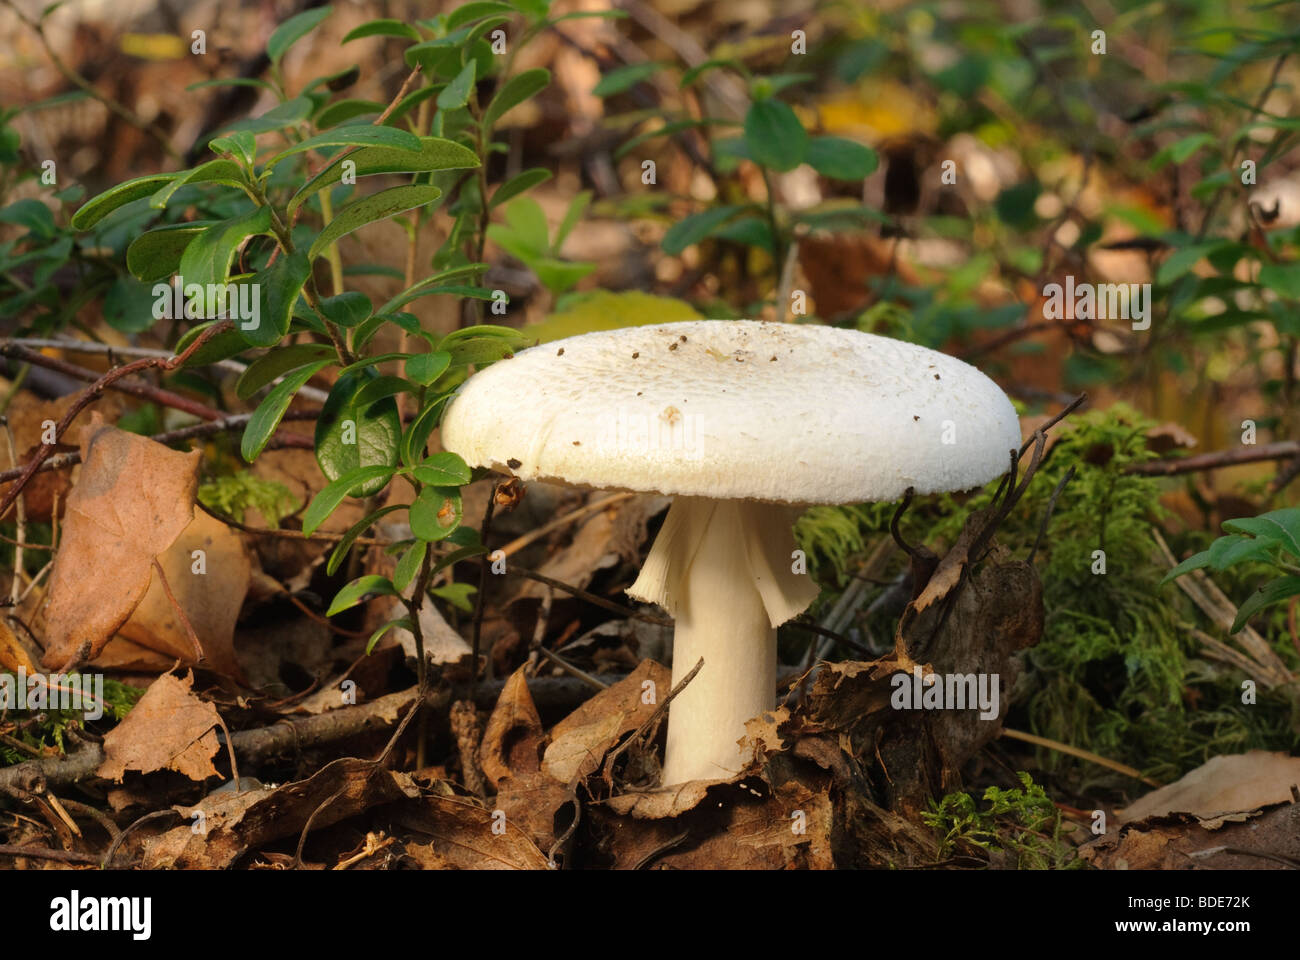 white mushroom growing among dry leaves Stock Photo